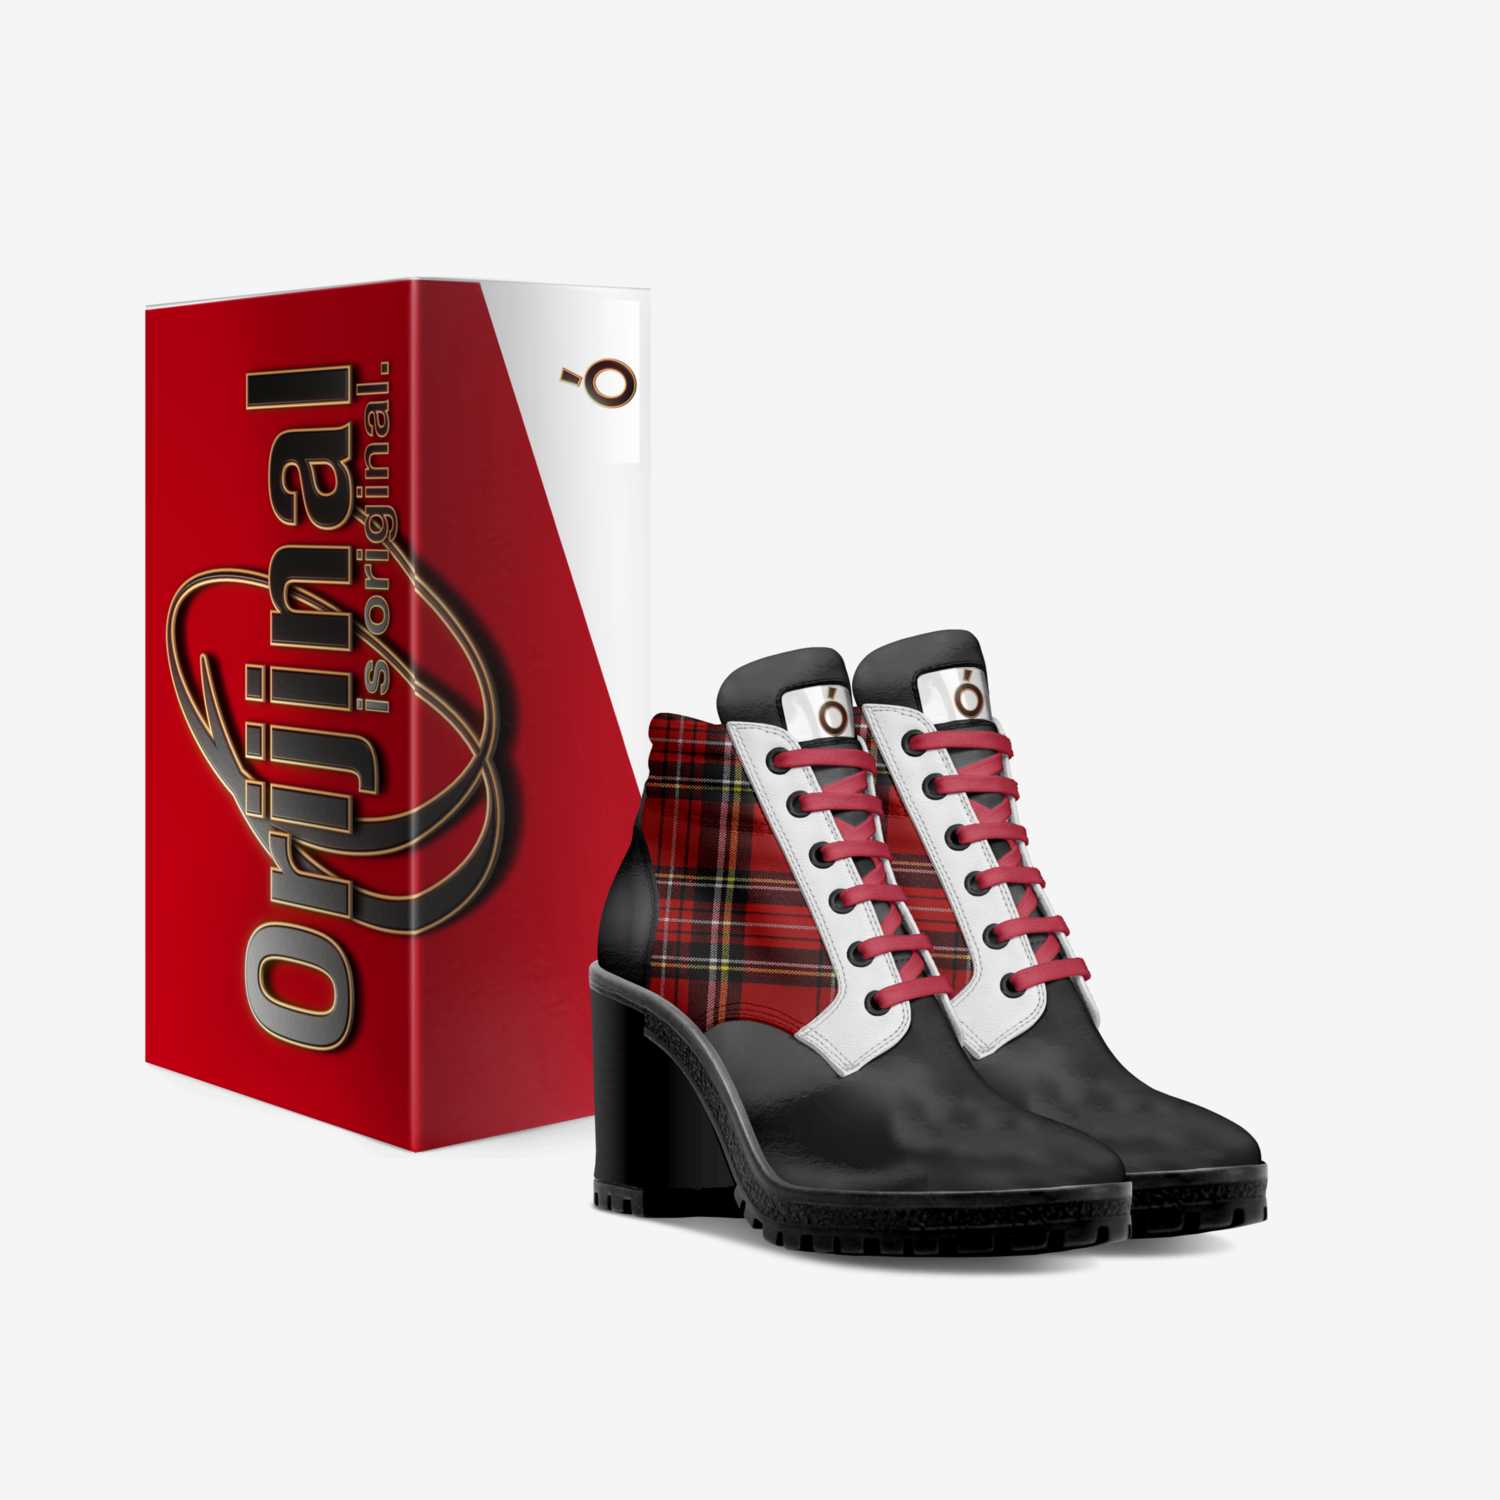 ORIJINAL custom made in Italy shoes by Sylvia Gunawan | Box view